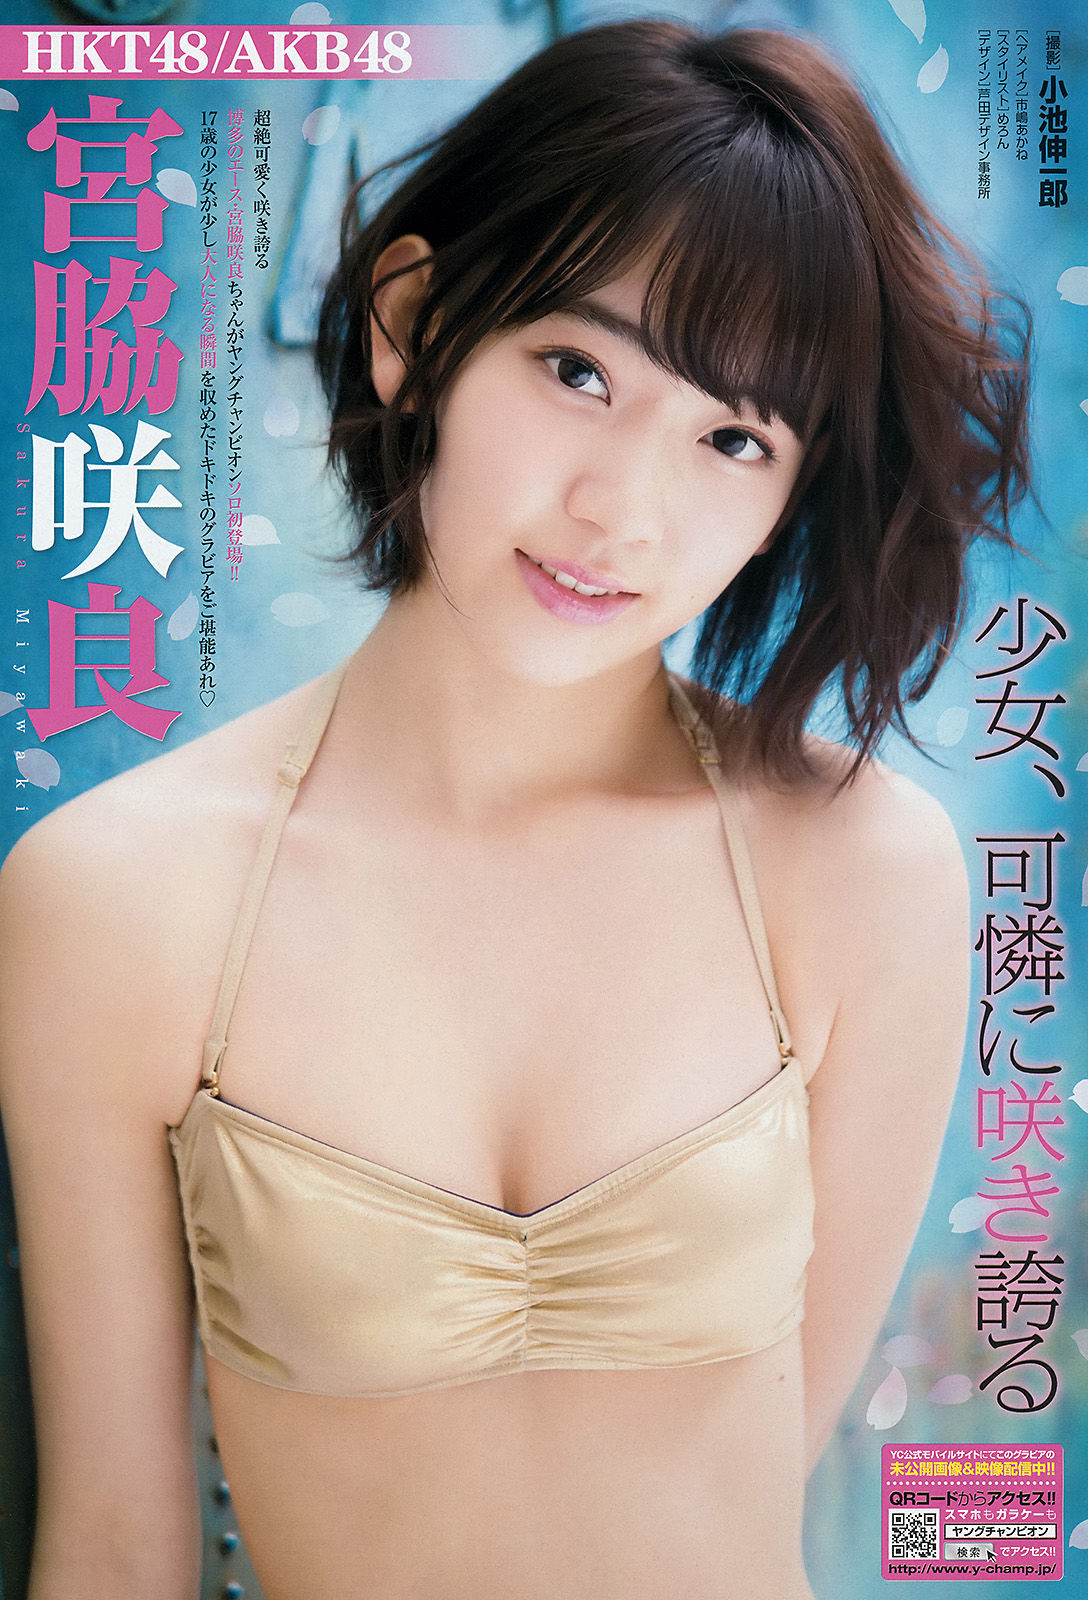 [Junger Champion] Sakura Miyawaki Jun Amaki 2015 Nr. 11 Foto Seite 13 No.2c5fc7